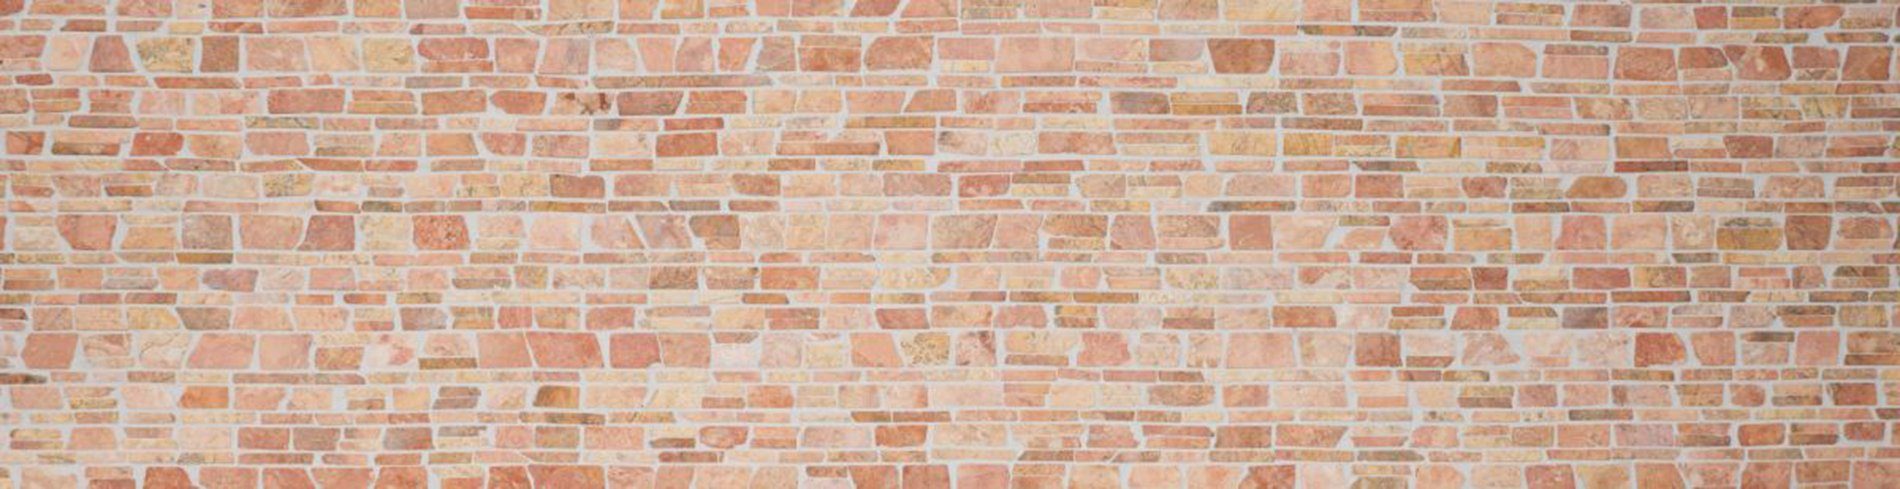 Mosaik Wandverblender Rossoverona Naturstein Bodenfliese Mosani Marmor rot Brickmosaik